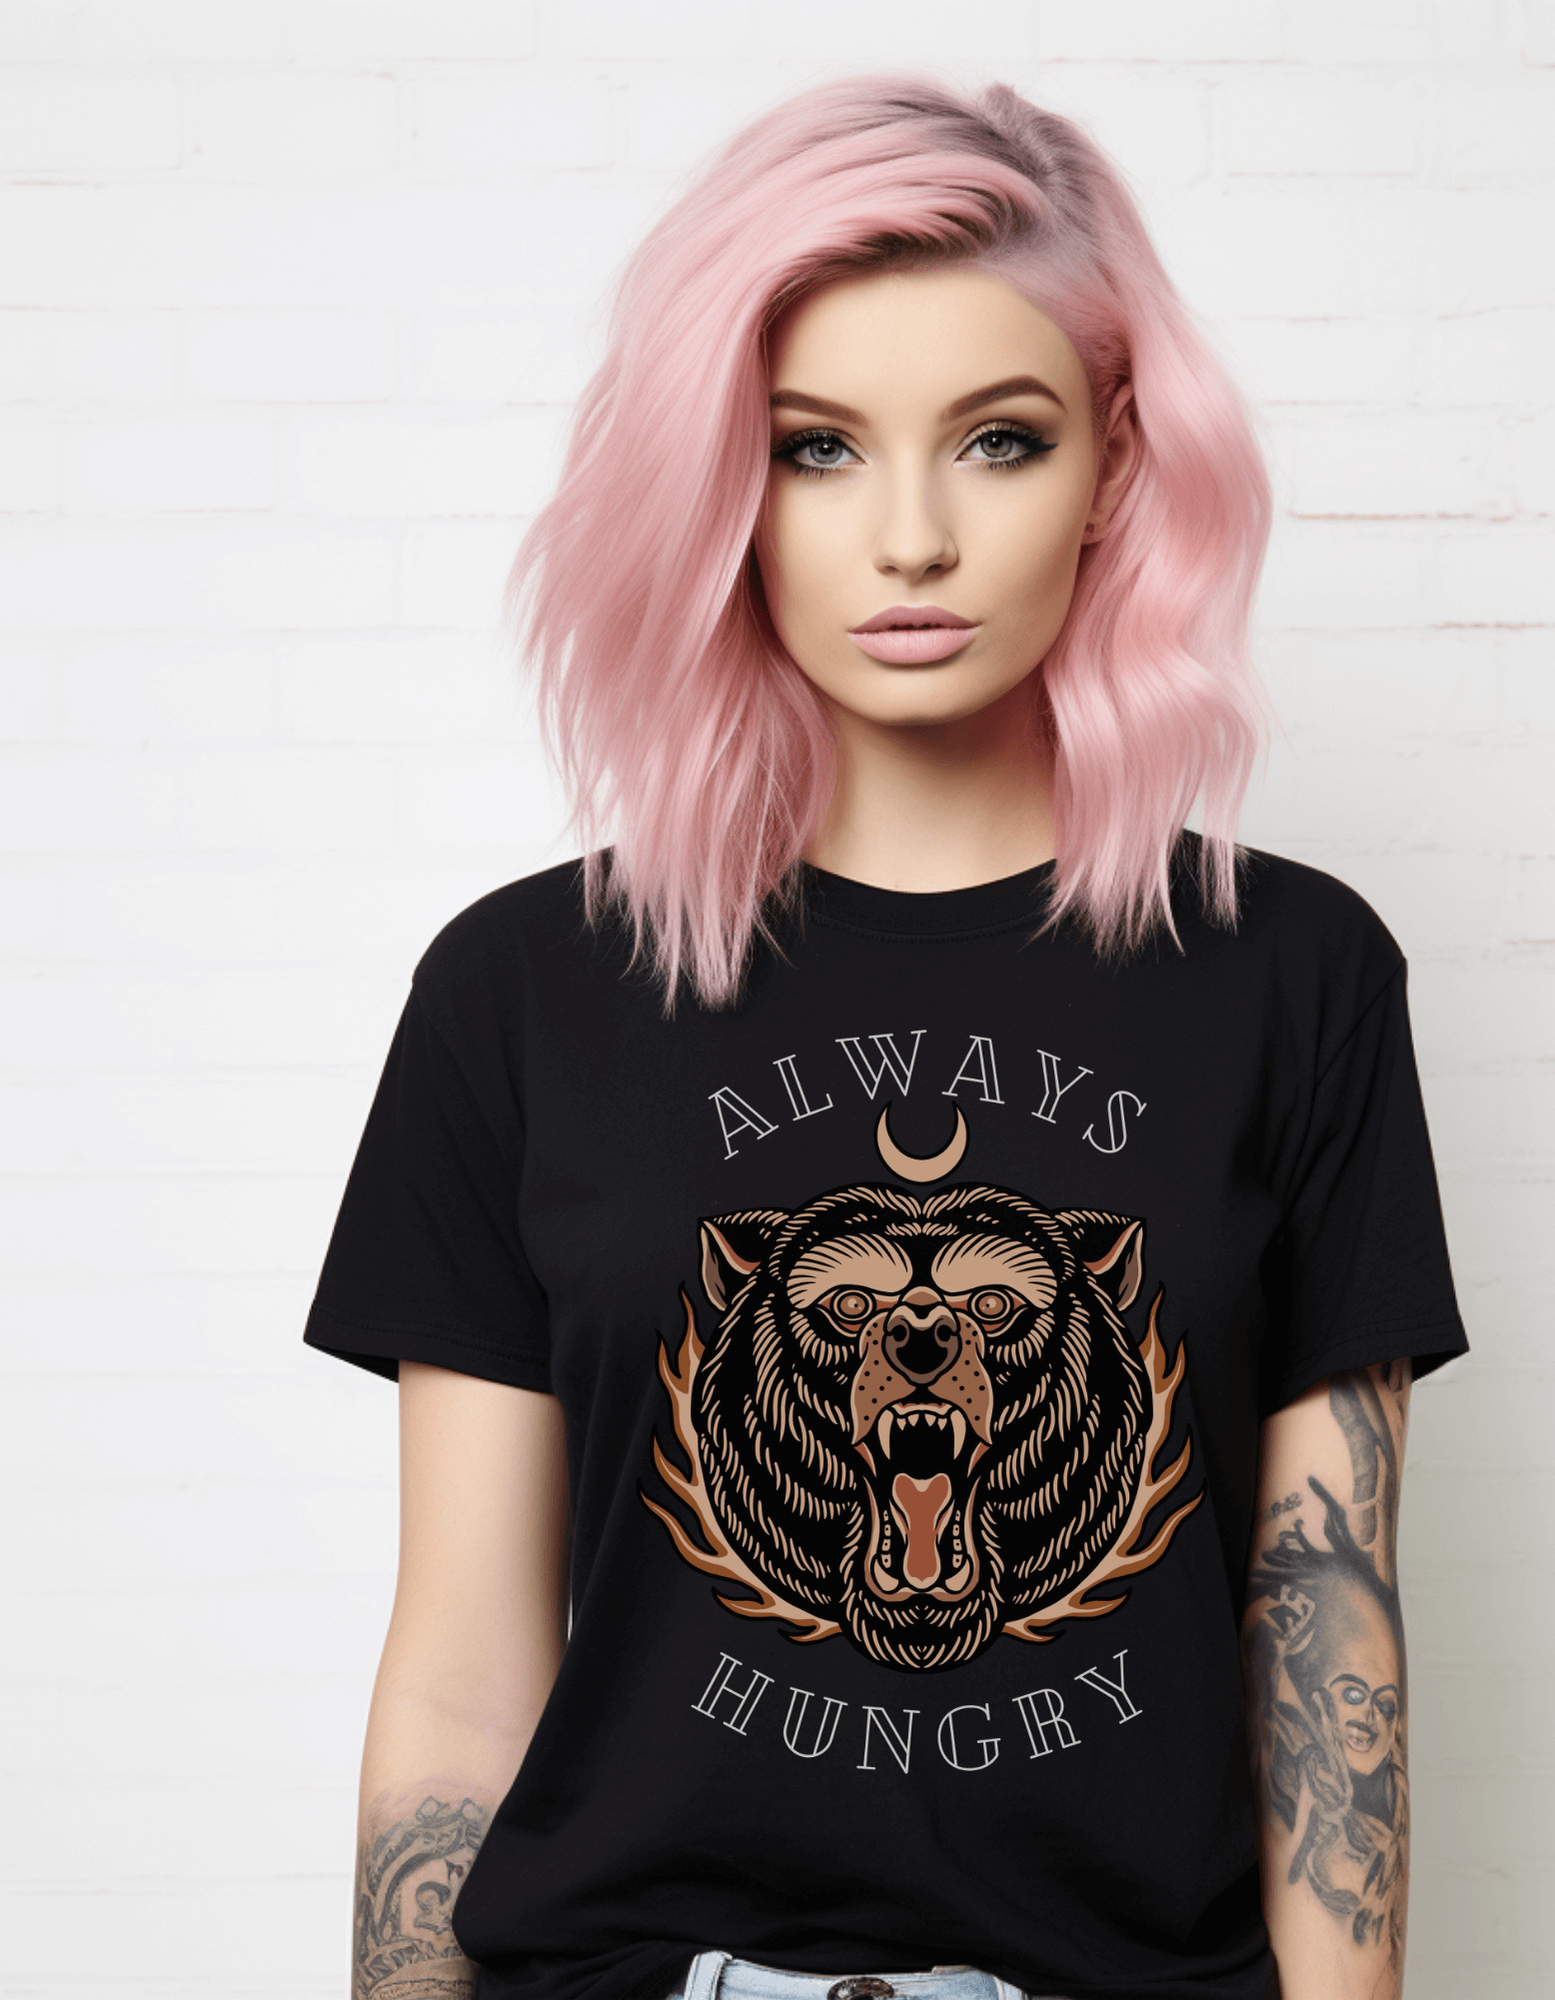 Always Hungry Bear Tattoo T-shirt / Traditional Tattoo Tee Shirt / Punk Rock Clothing Tshirt Rockabilly Psychobilly Freak Goth - Foxlark Crystal Jewelry